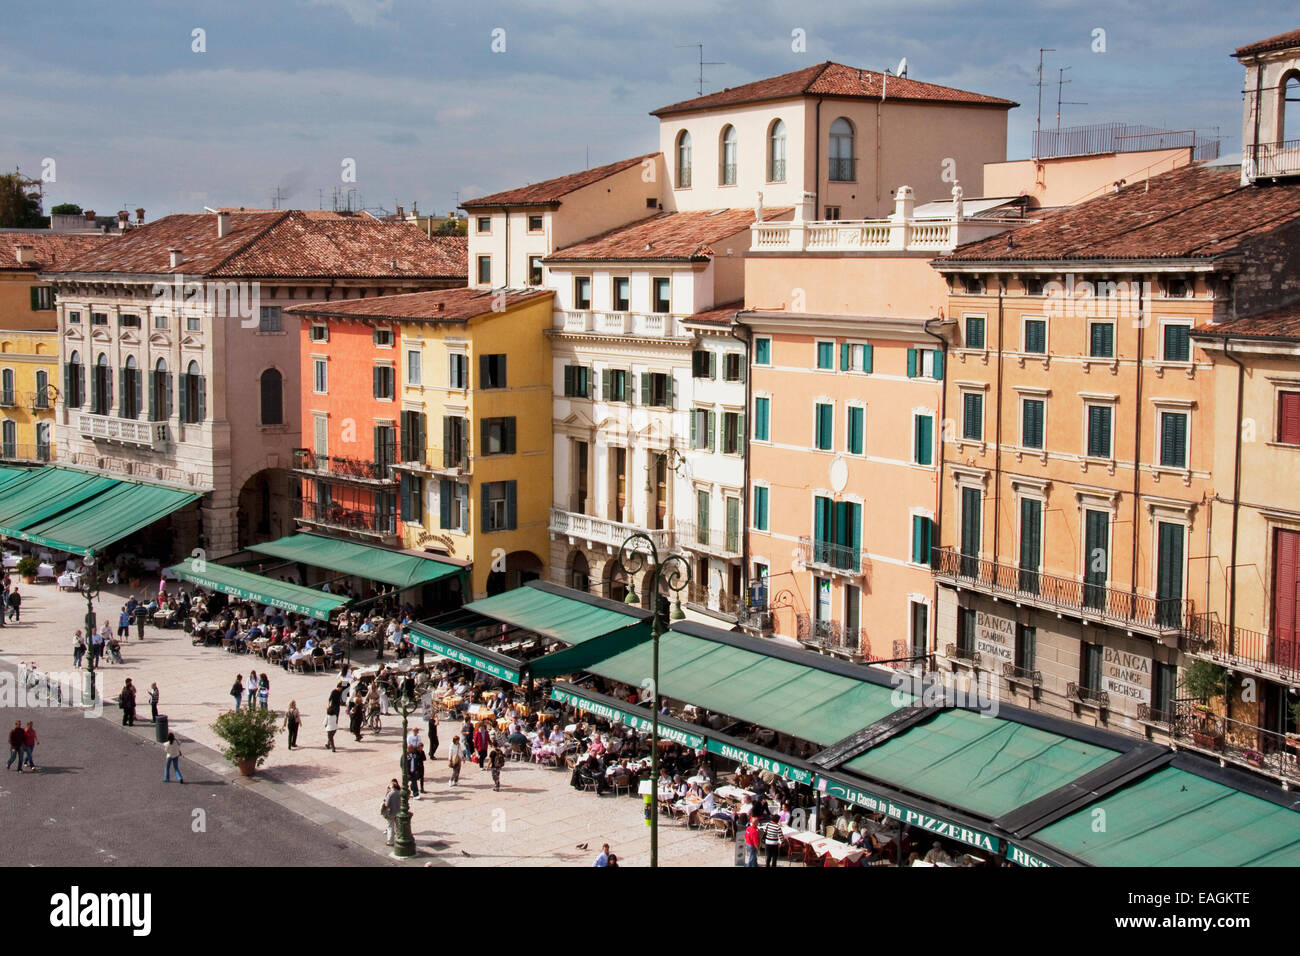 Piazza Bra, Verona, Italy Stock Photo - Alamy